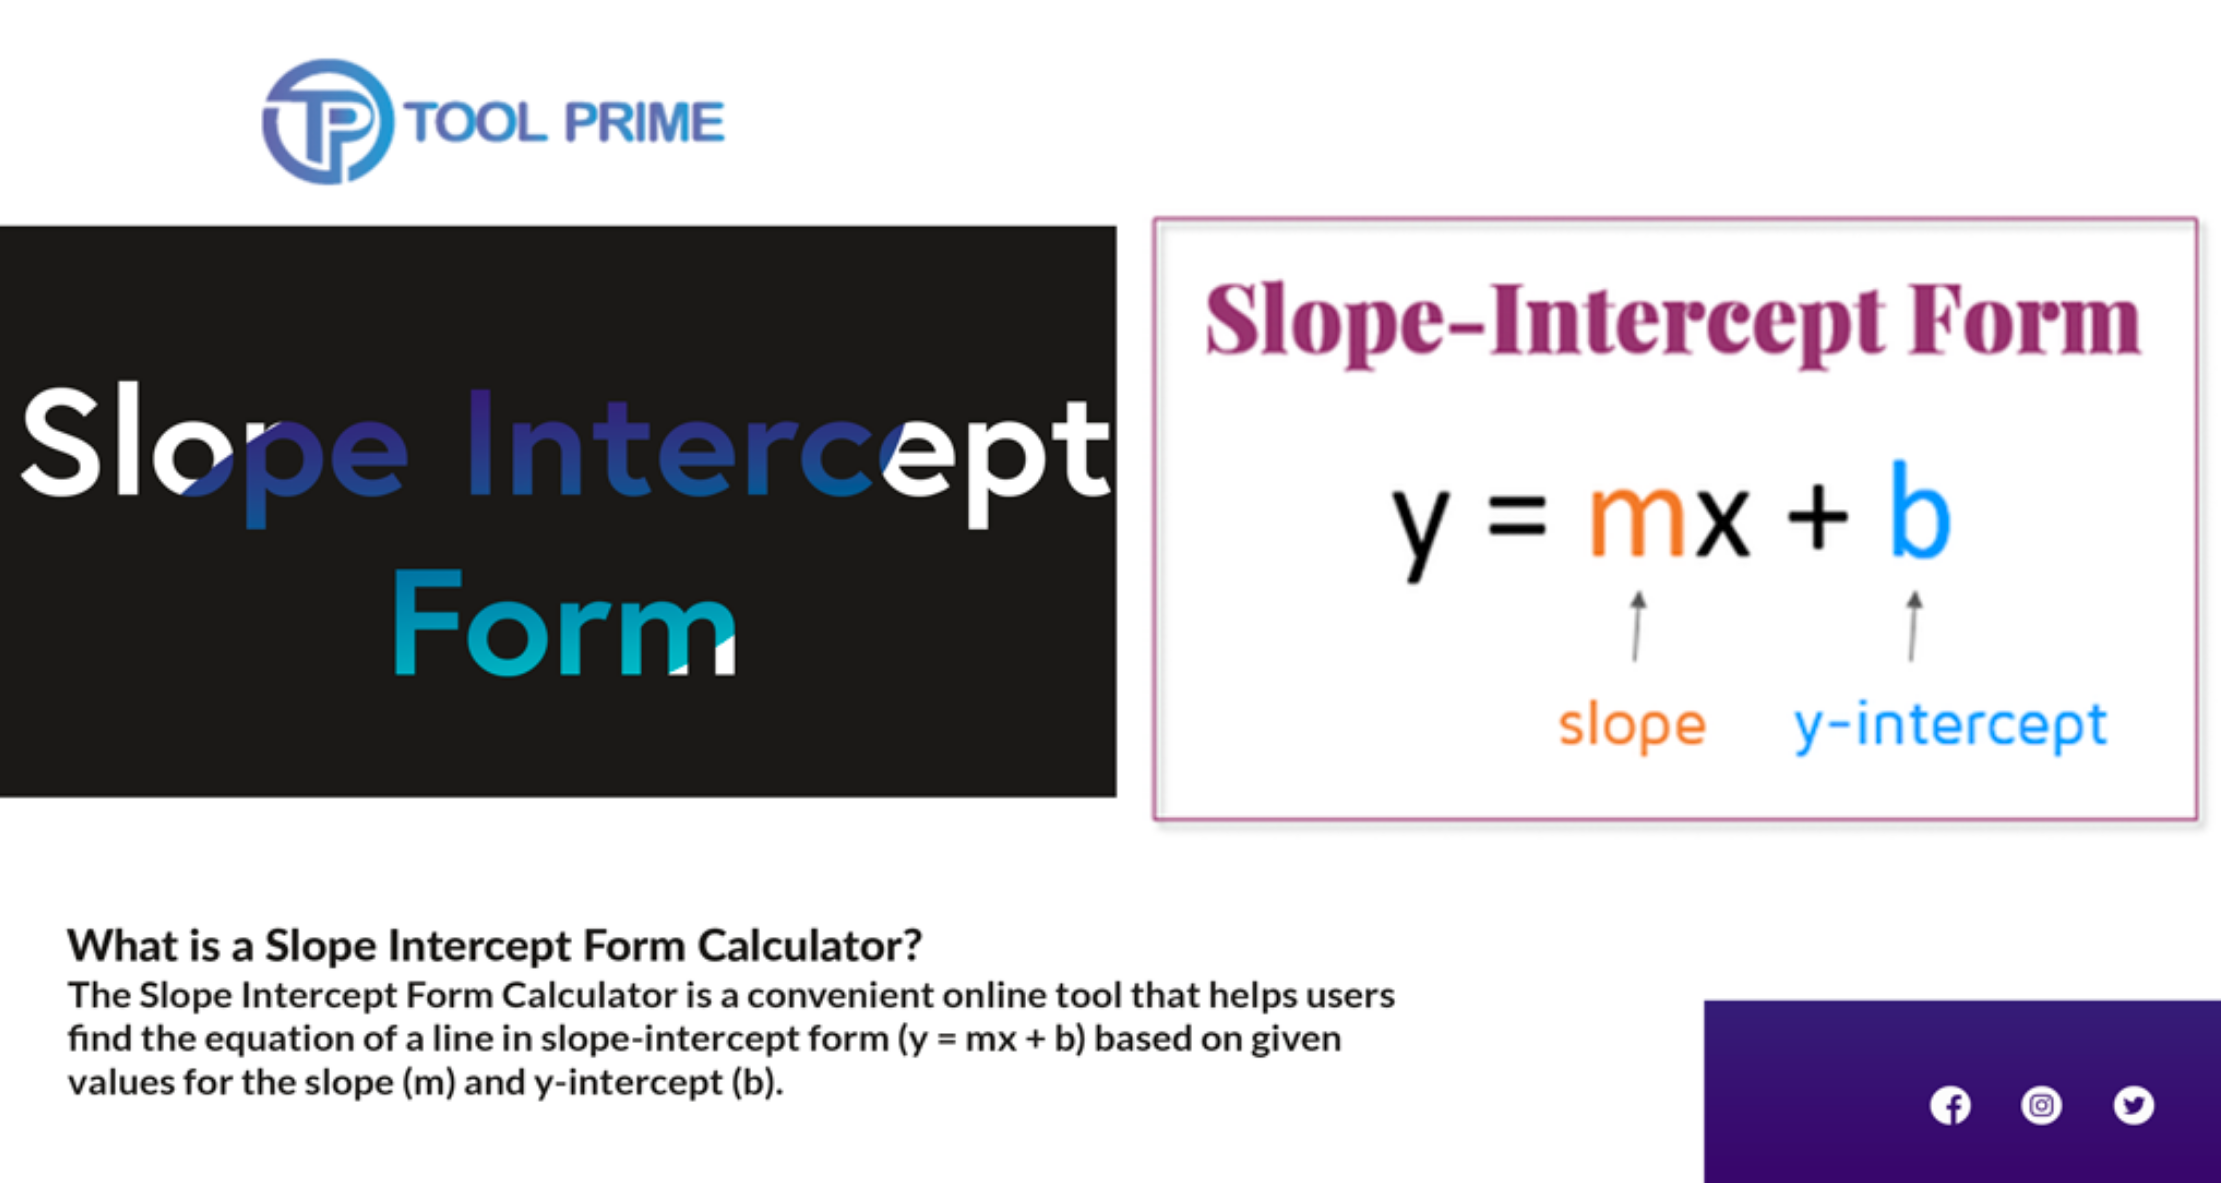 Slope-Intercept Form Calculators